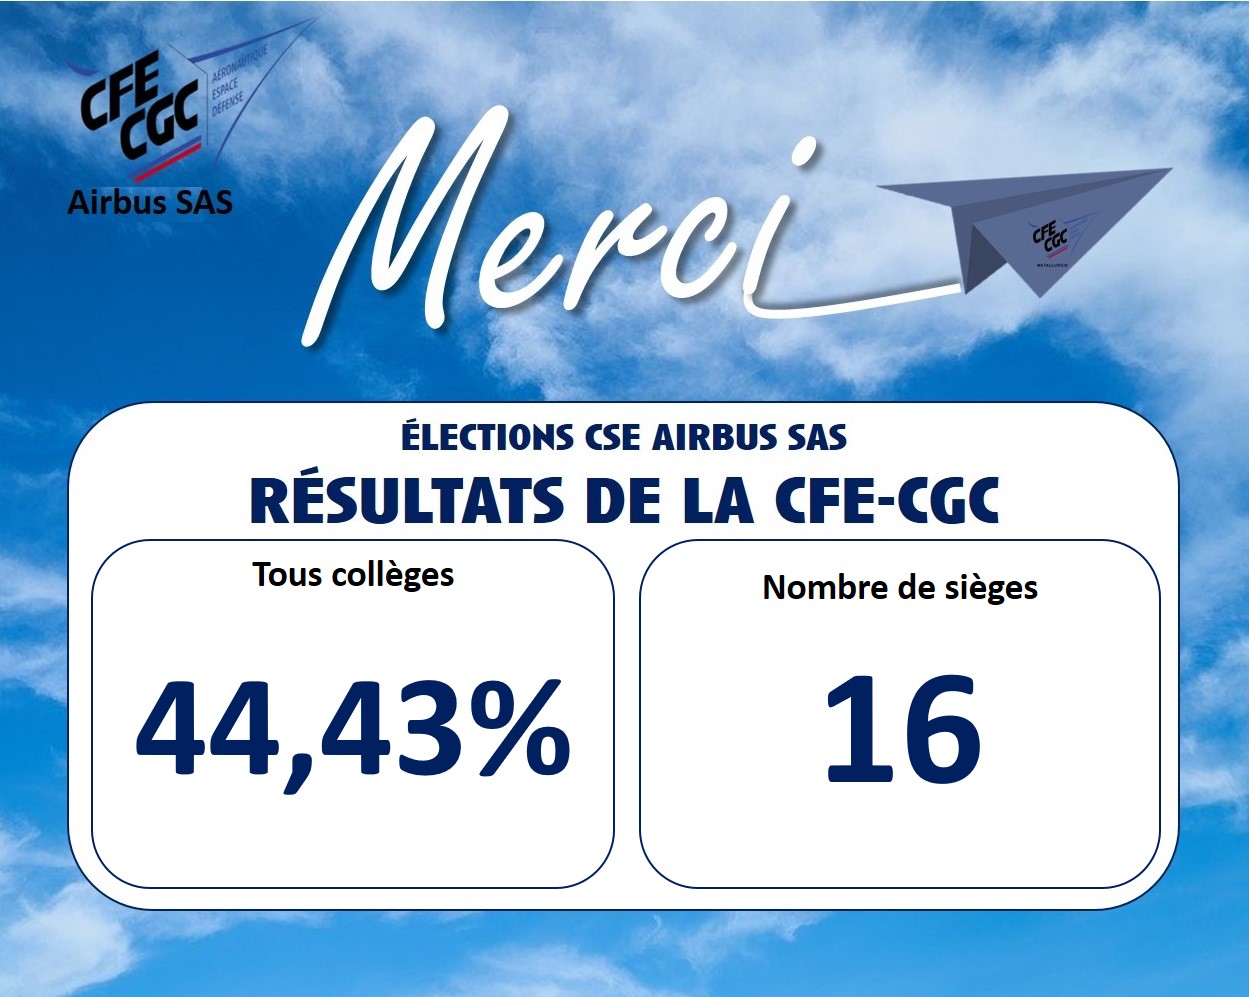 LA CFE-CGC 1ère ORGANISATION D’AIRBUS SAS !